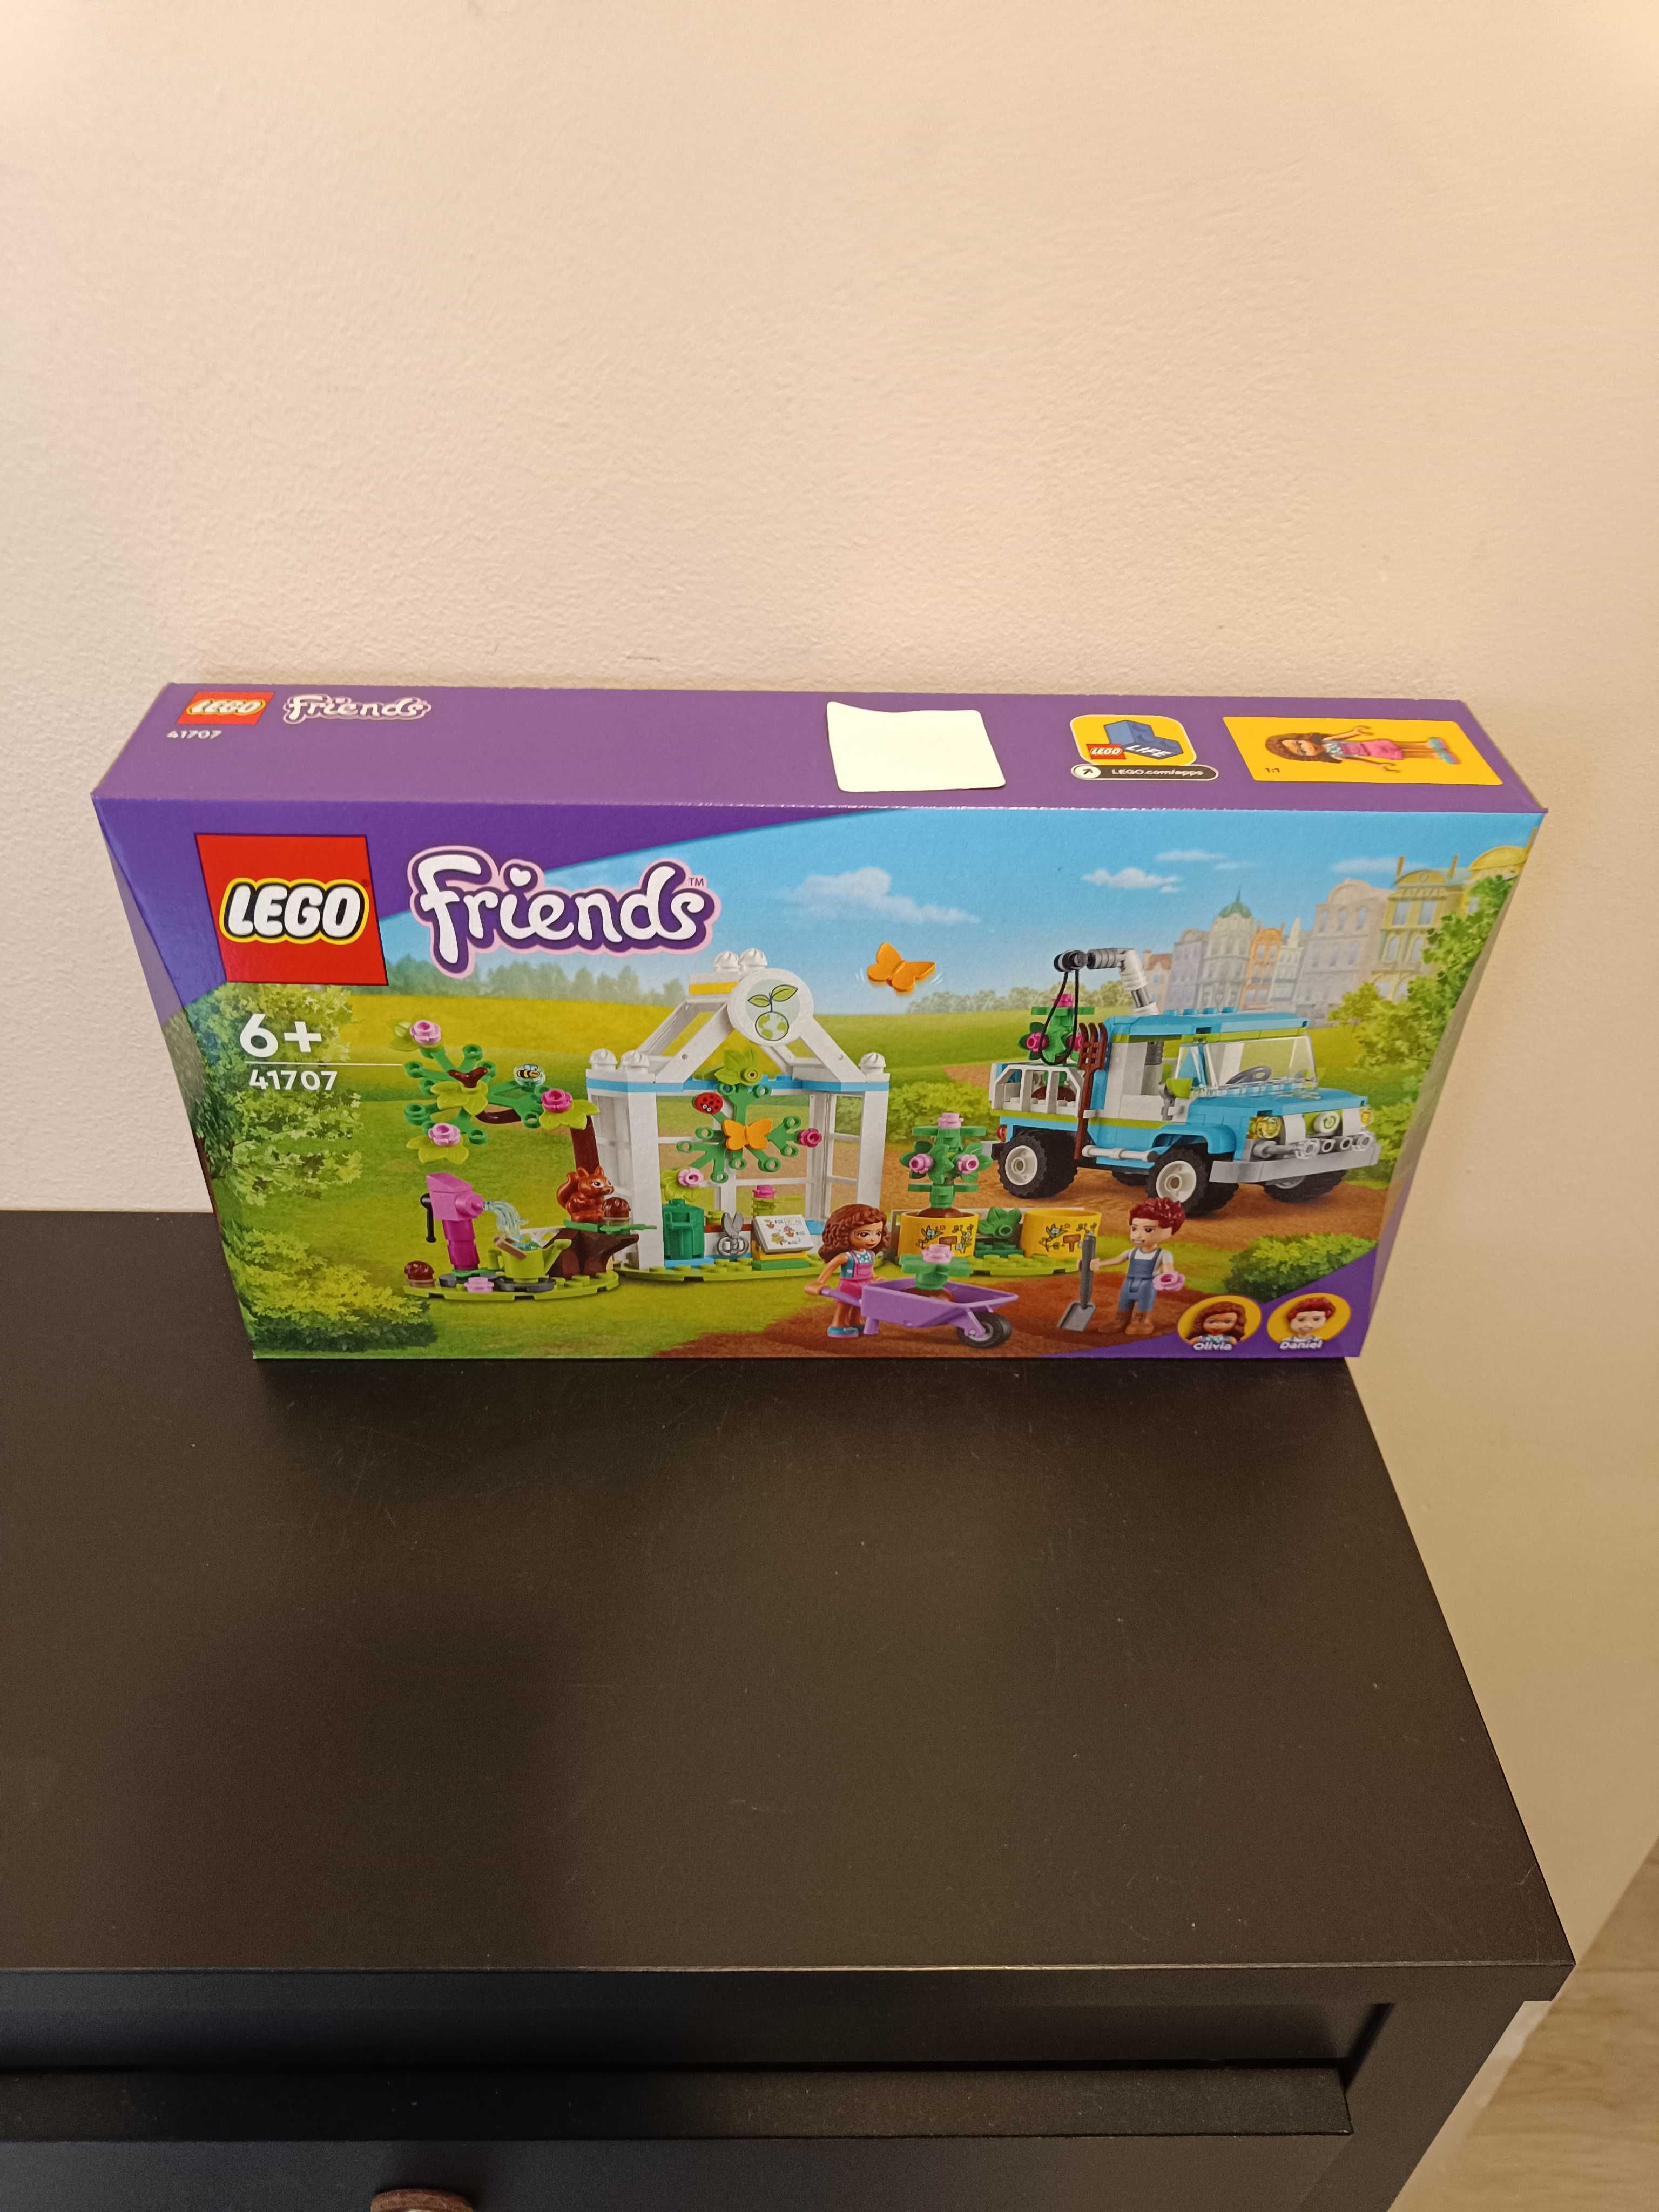 LEGO friends 41707